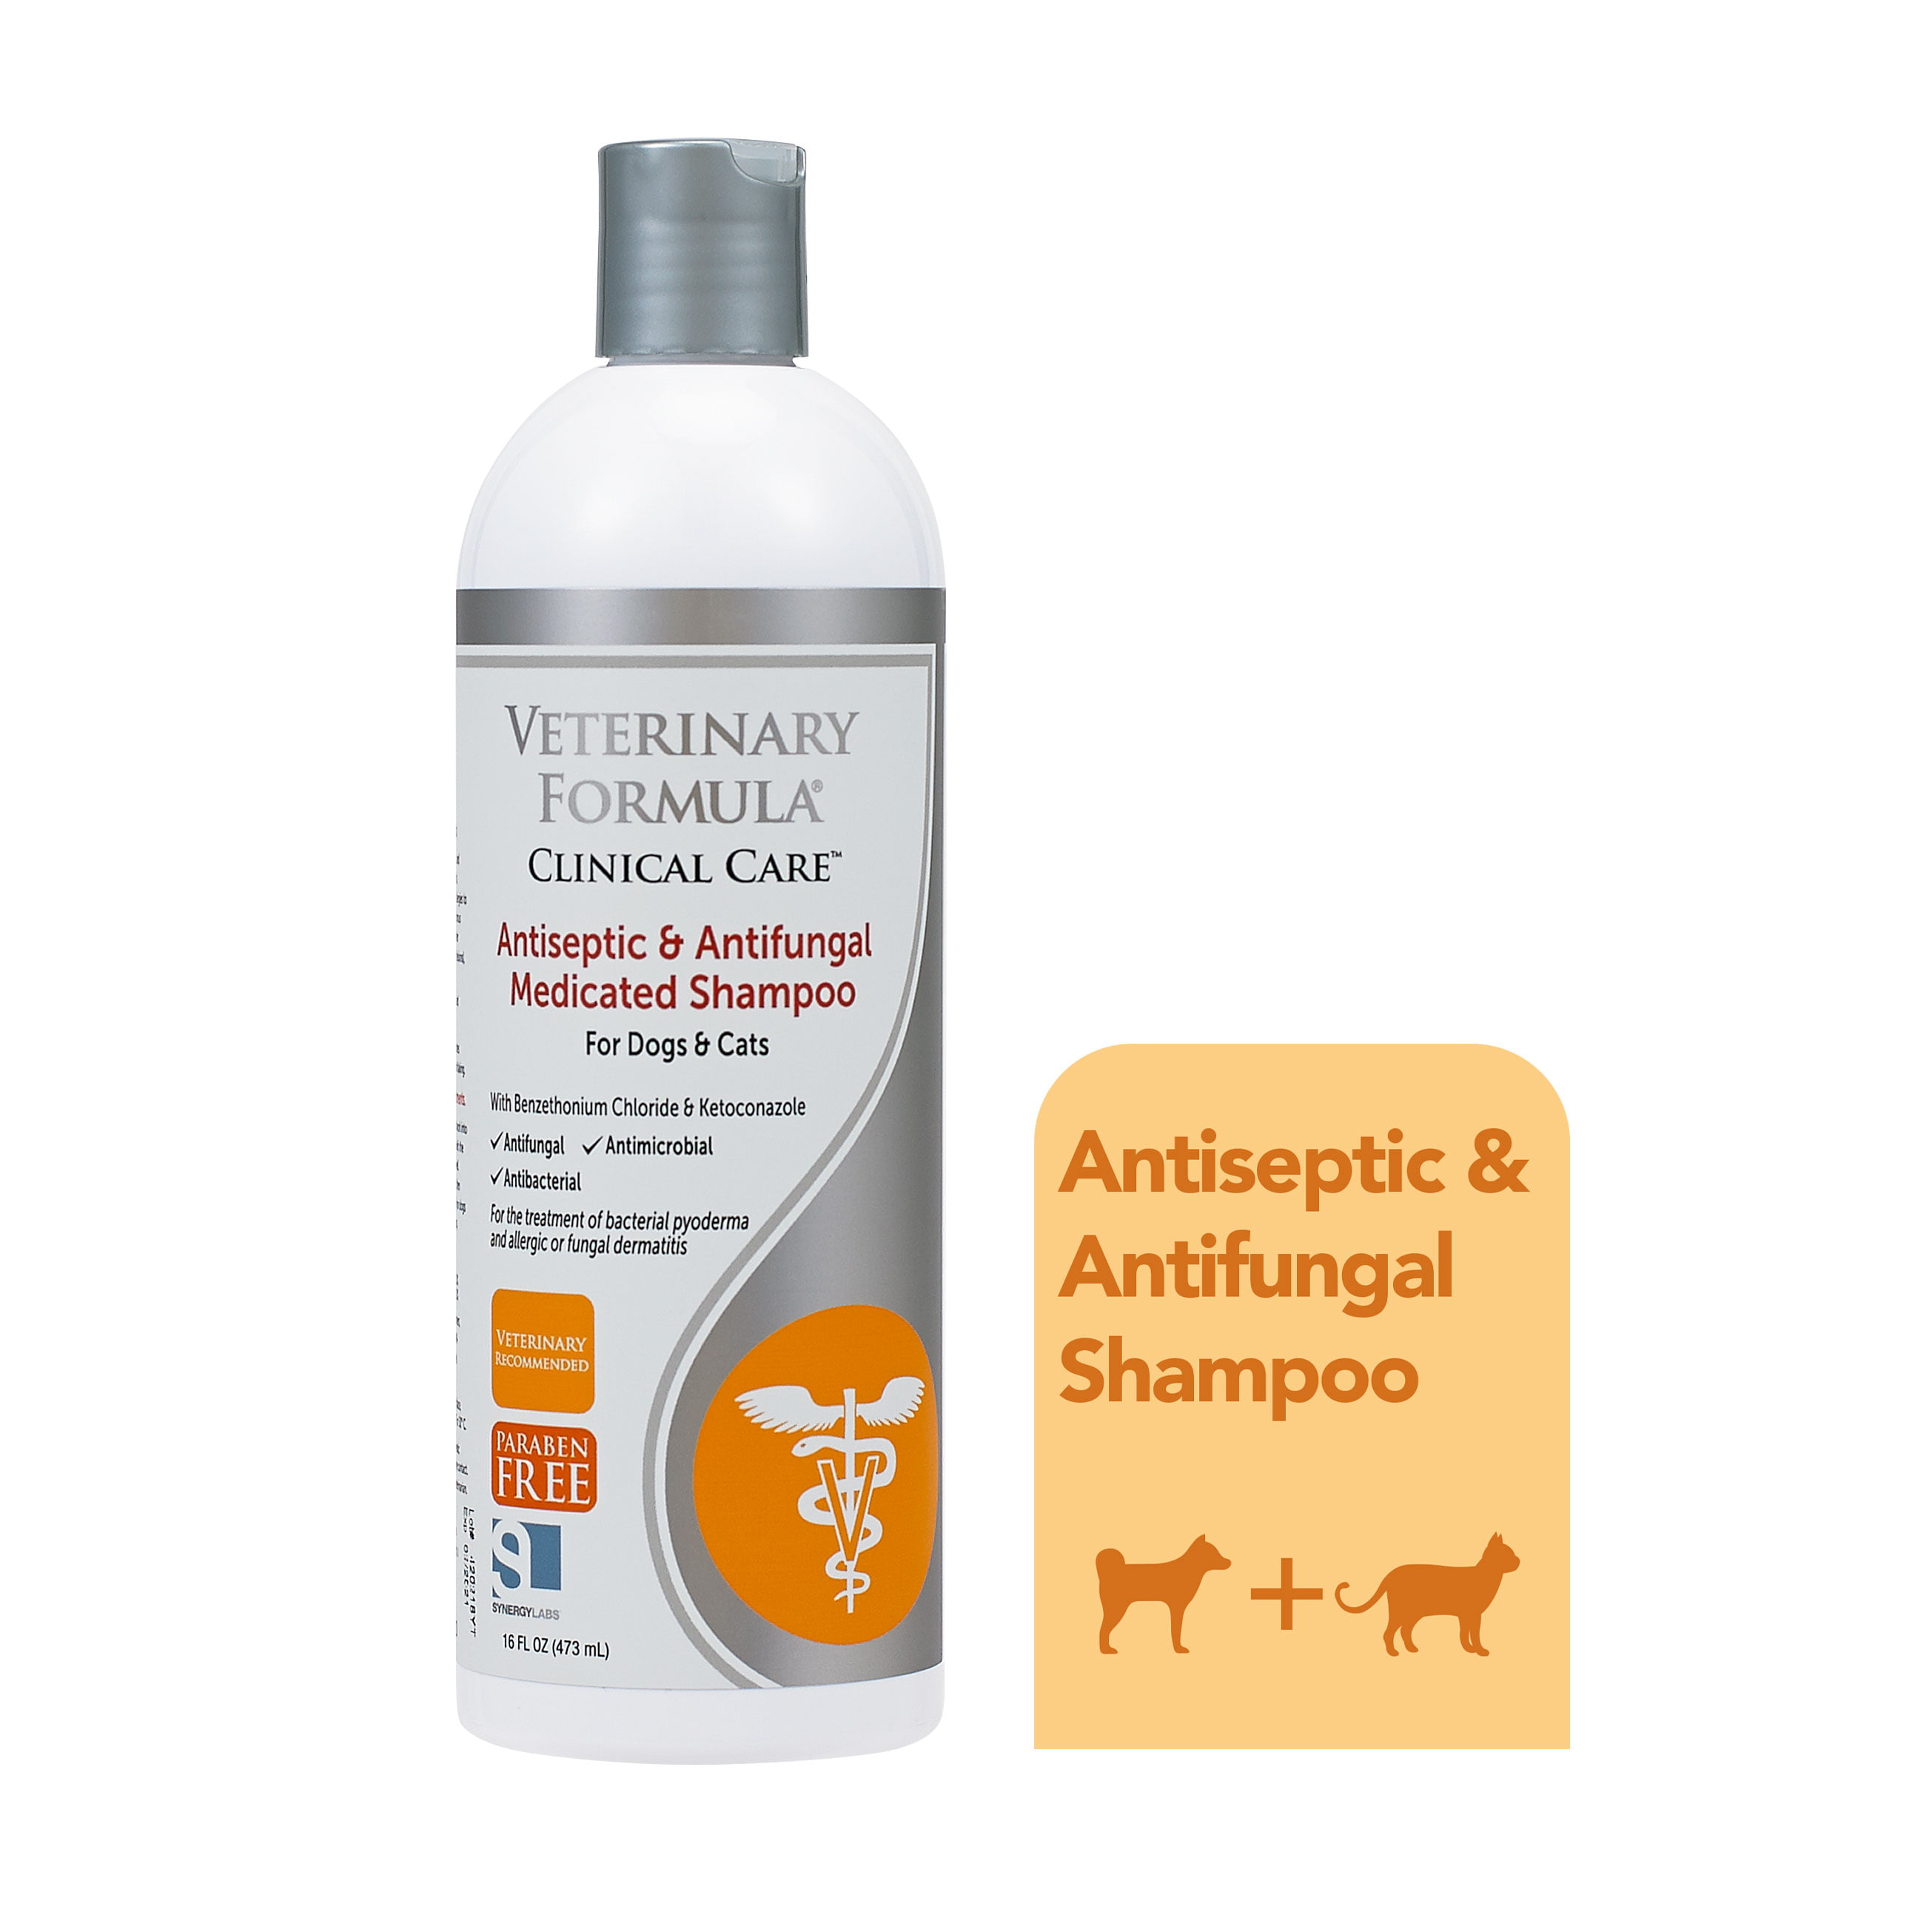 antibacterial shampoo for dogs walmart